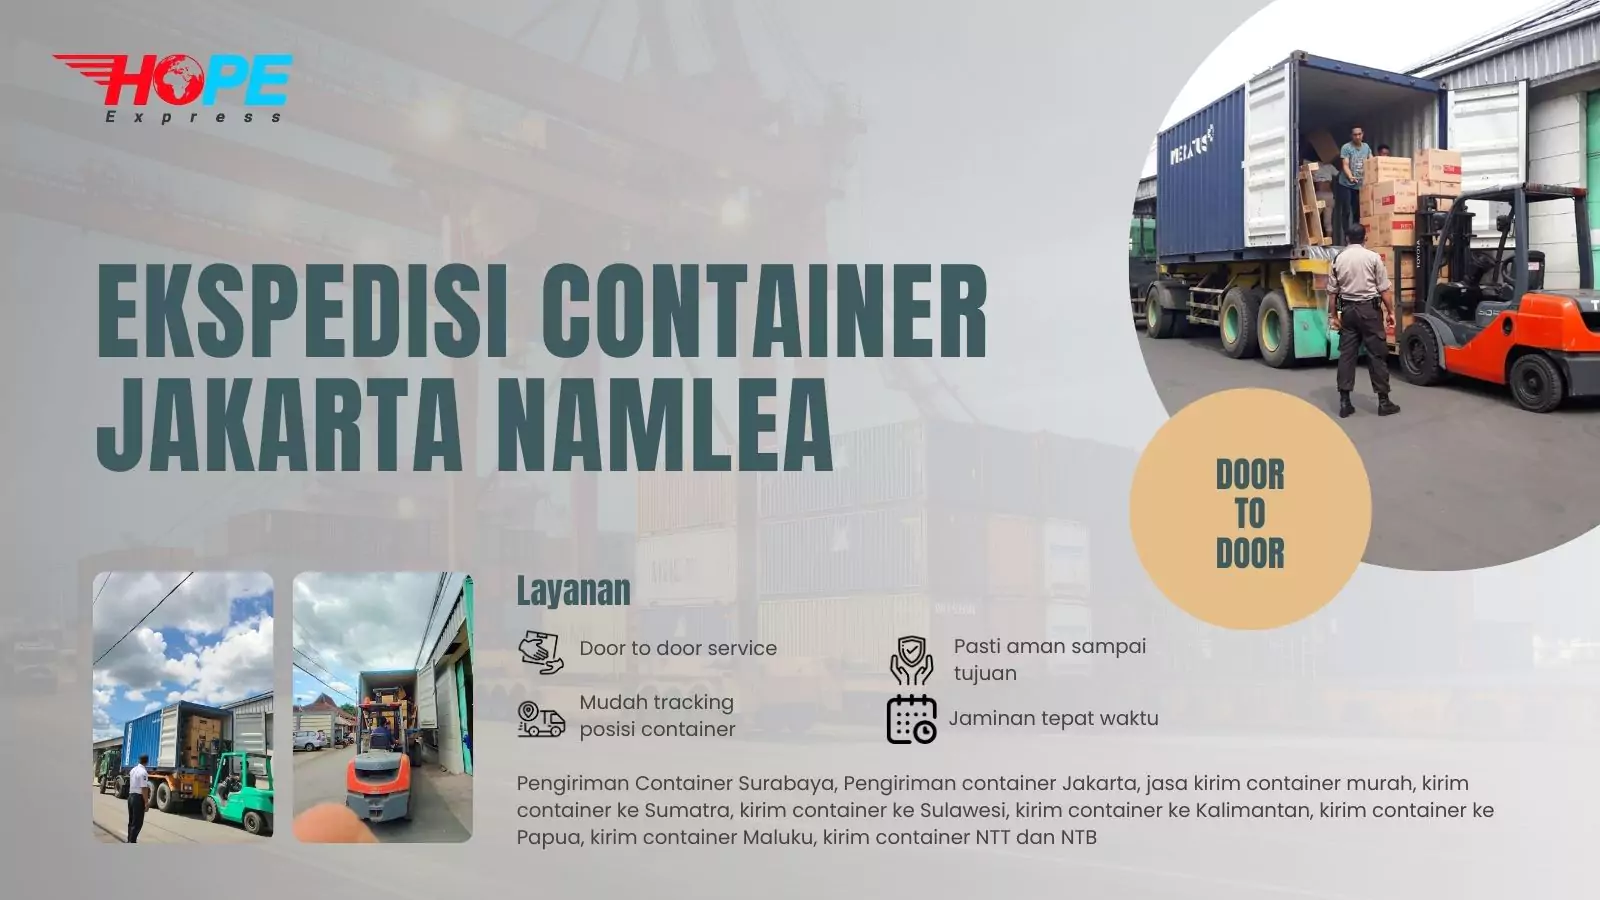 Ekspedisi Container Jakarta Namlea